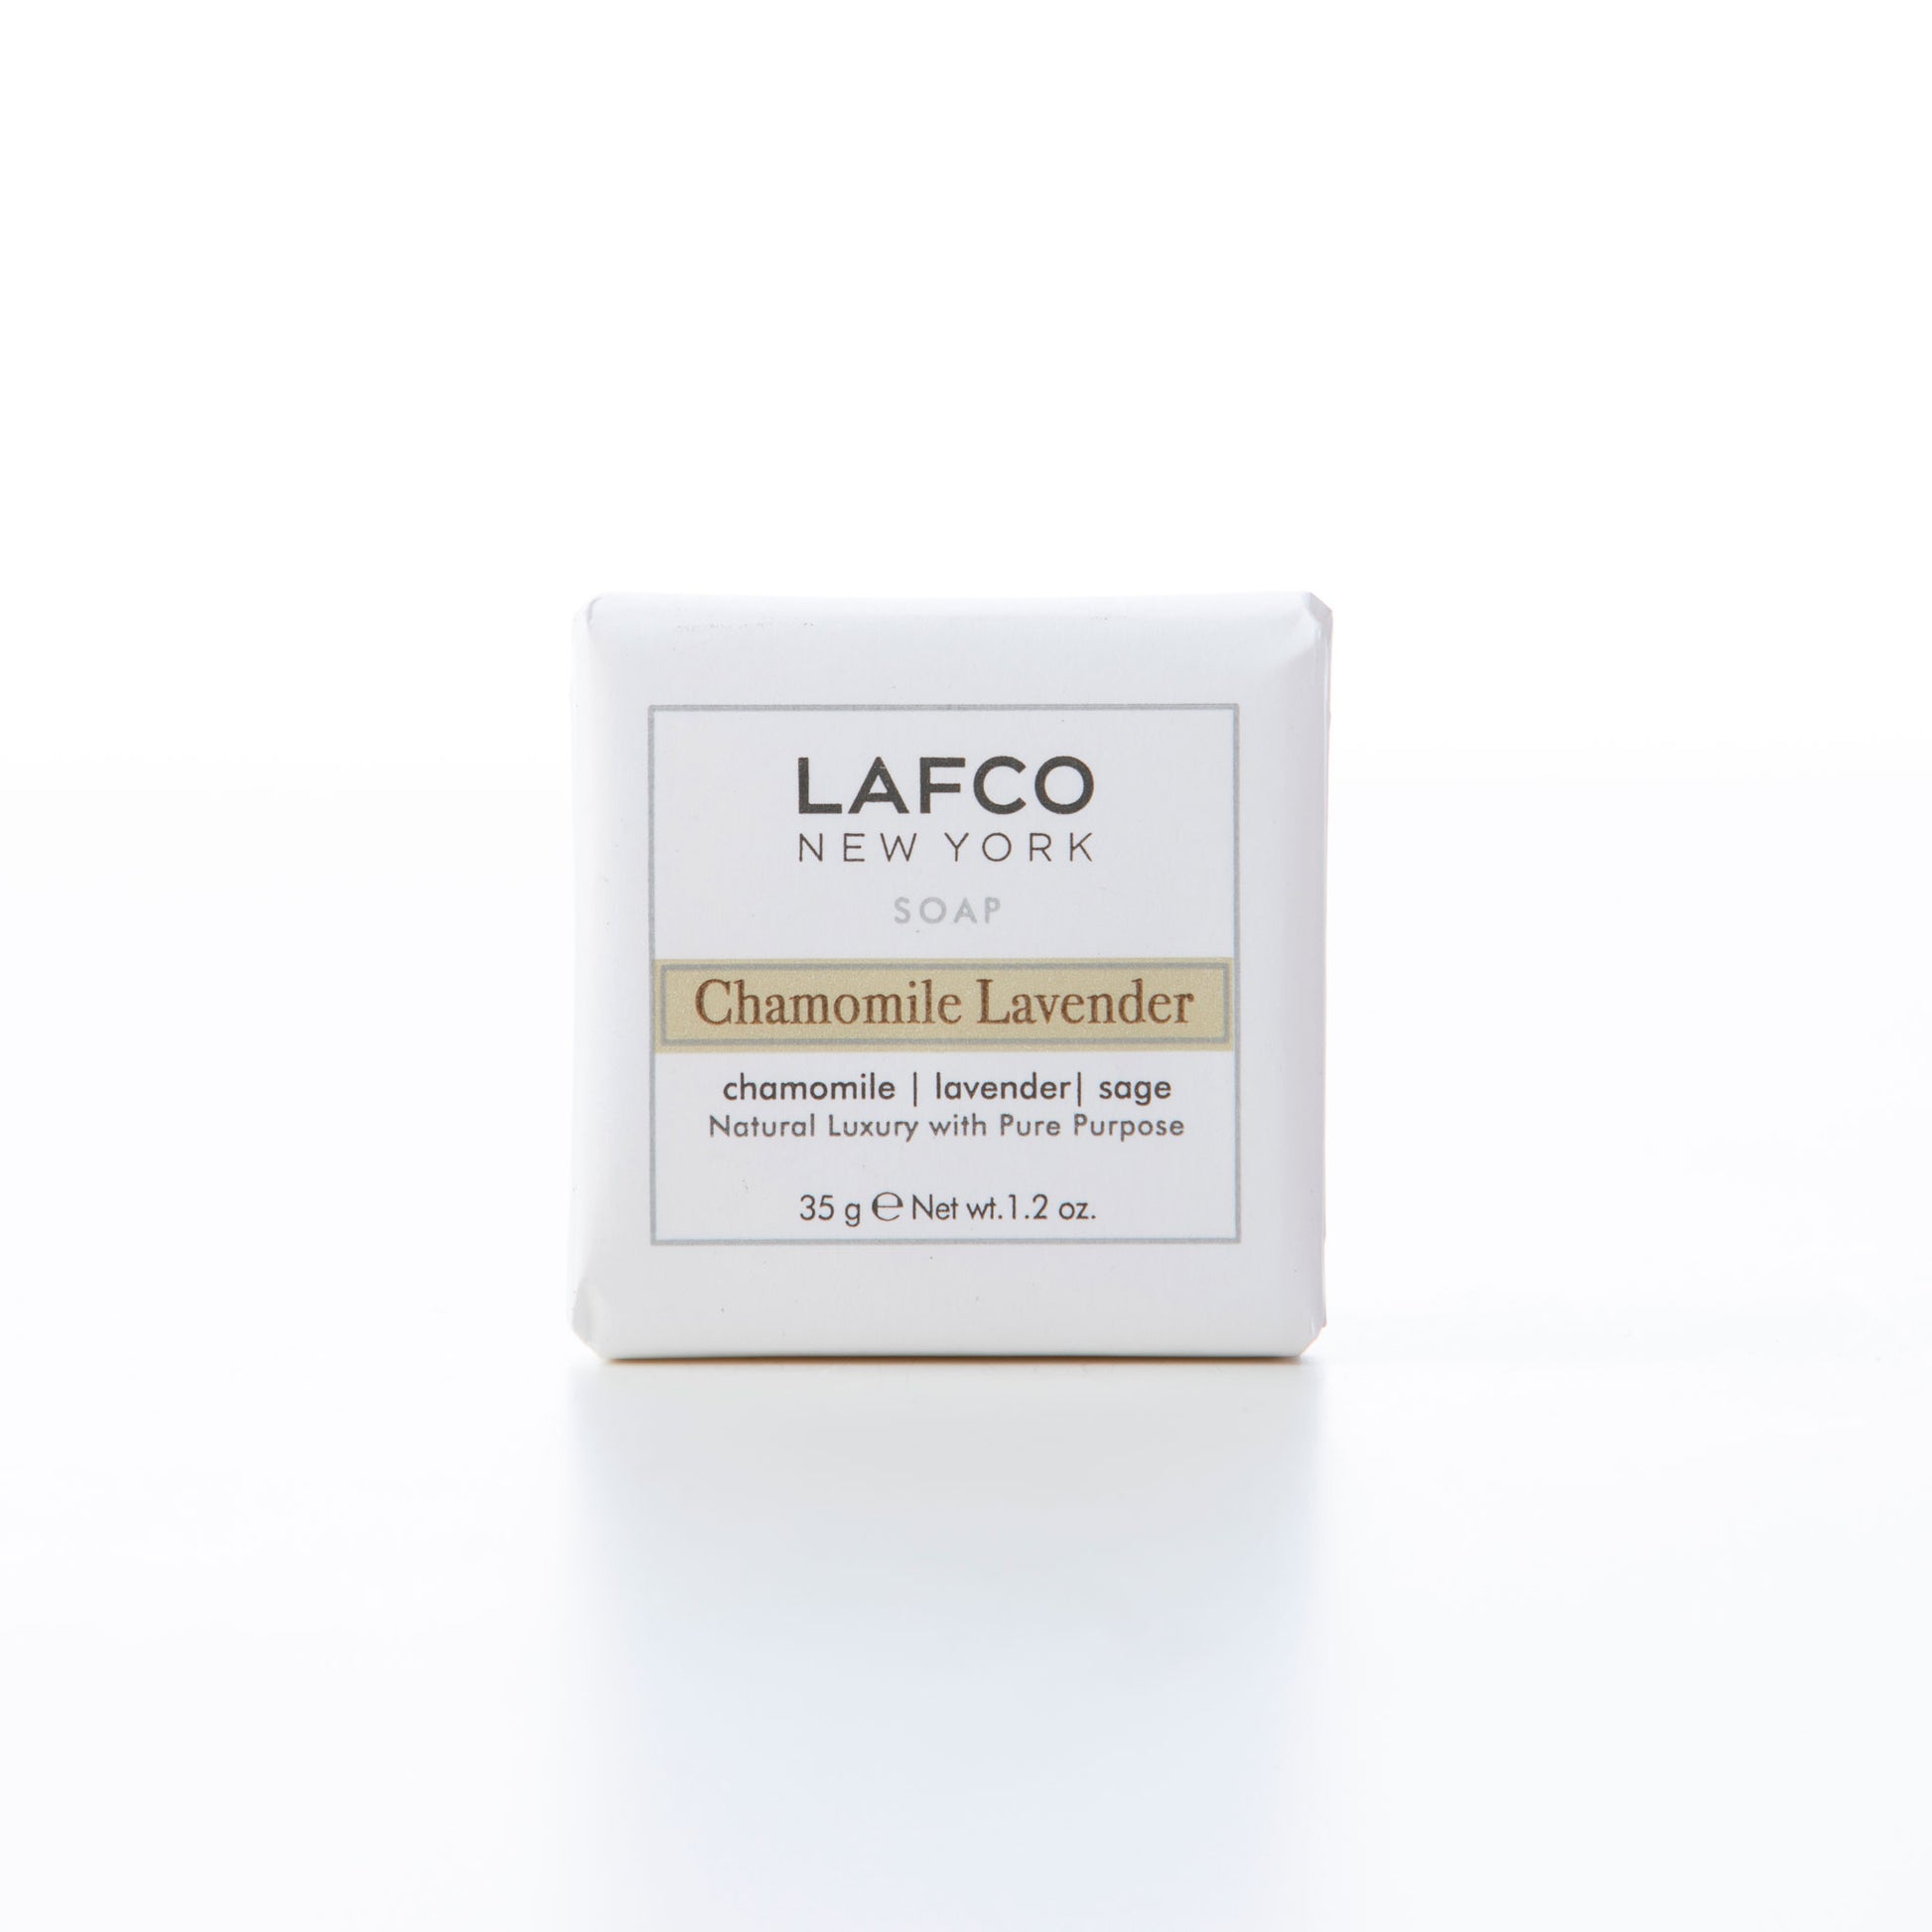 Lafco New York chamomile lavender 35 grams vegetable soap bar